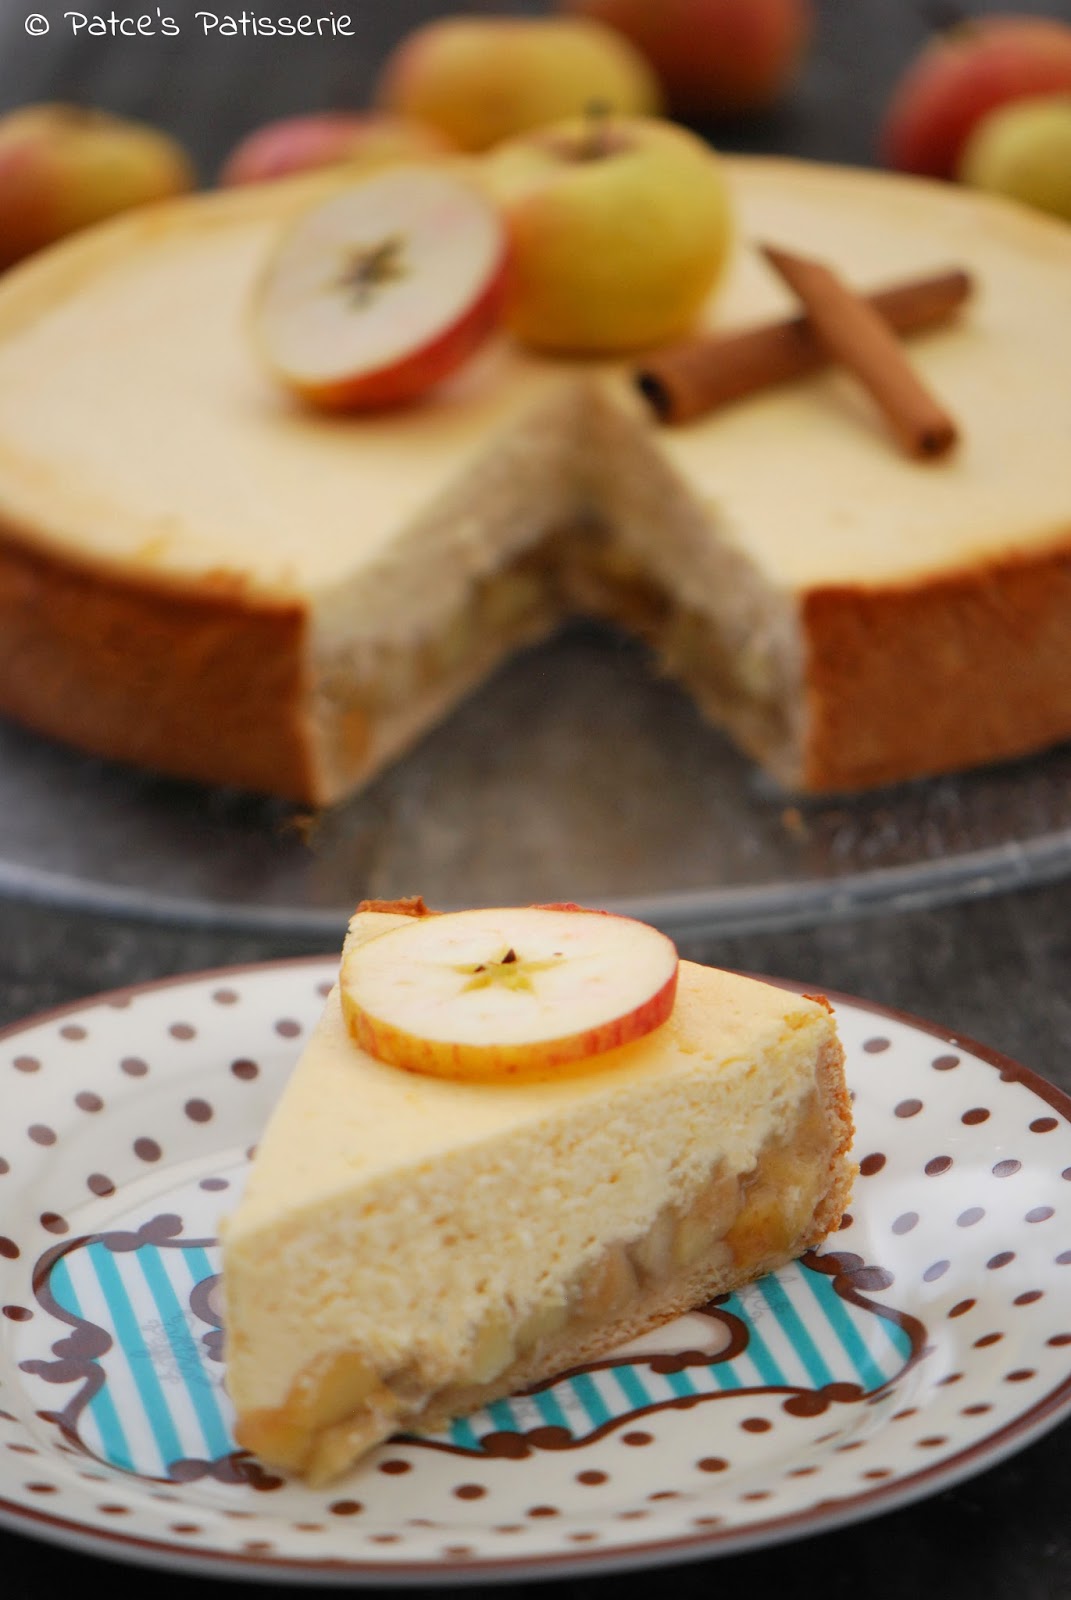 Patces Patisserie: Apfel-Zimt-Käsekuchen {Say cheese...cake!}